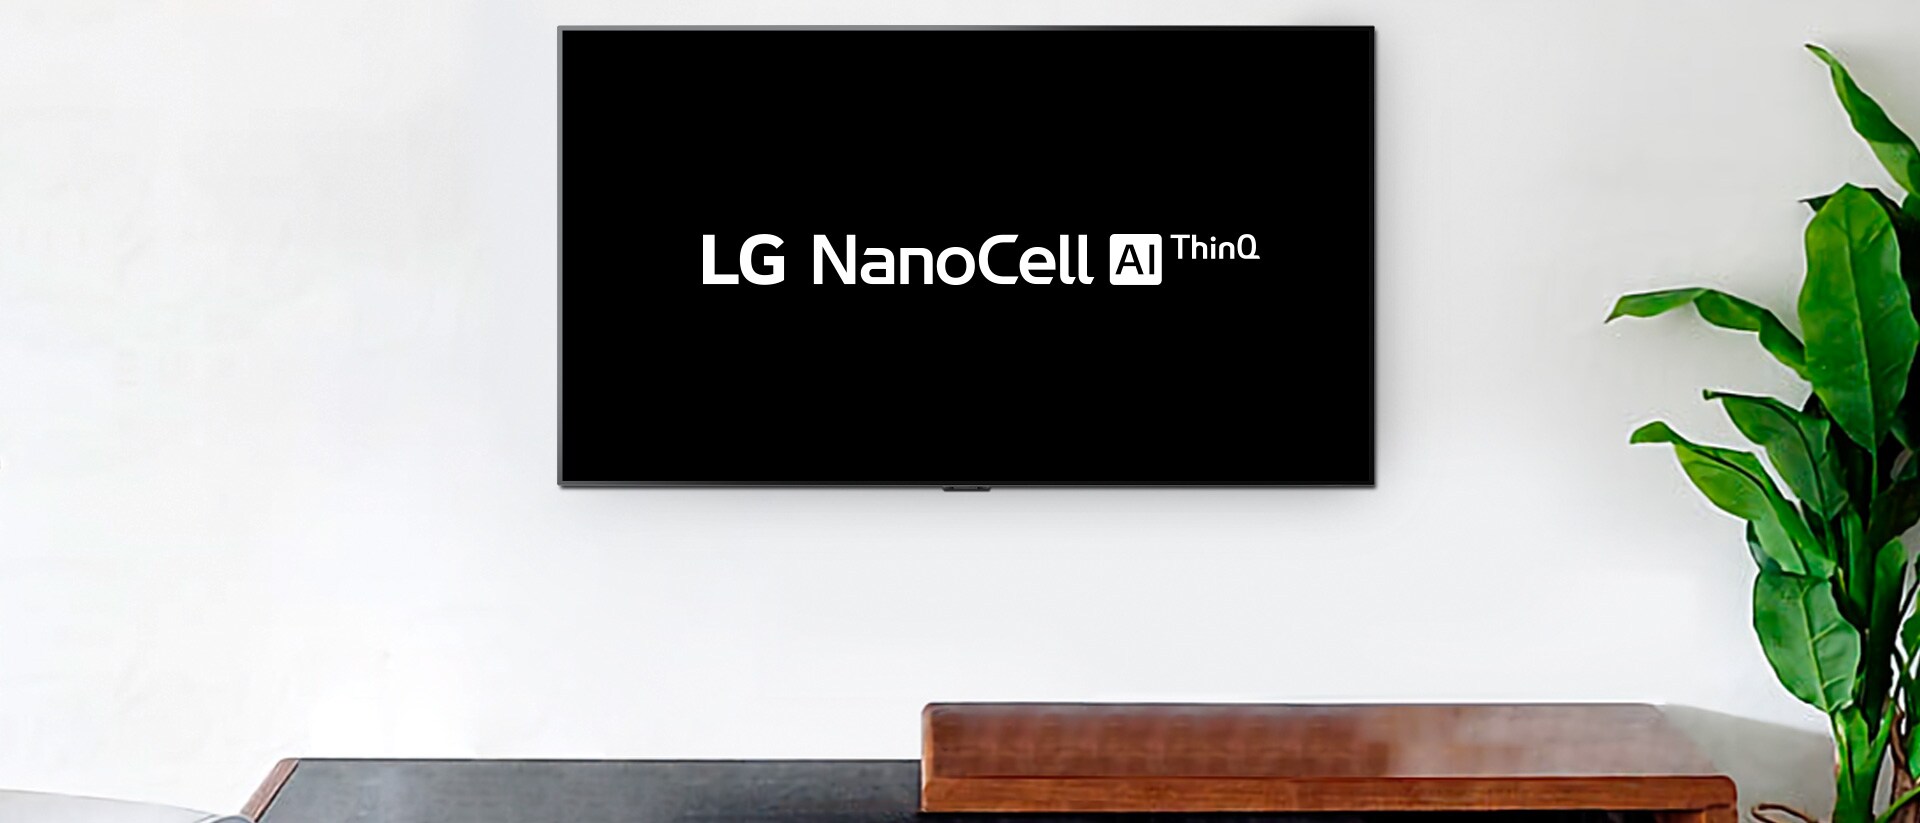 Televizor montiran na zid koji prikazuje logotip LG OLED AI ThinQ na crnoj pozadini